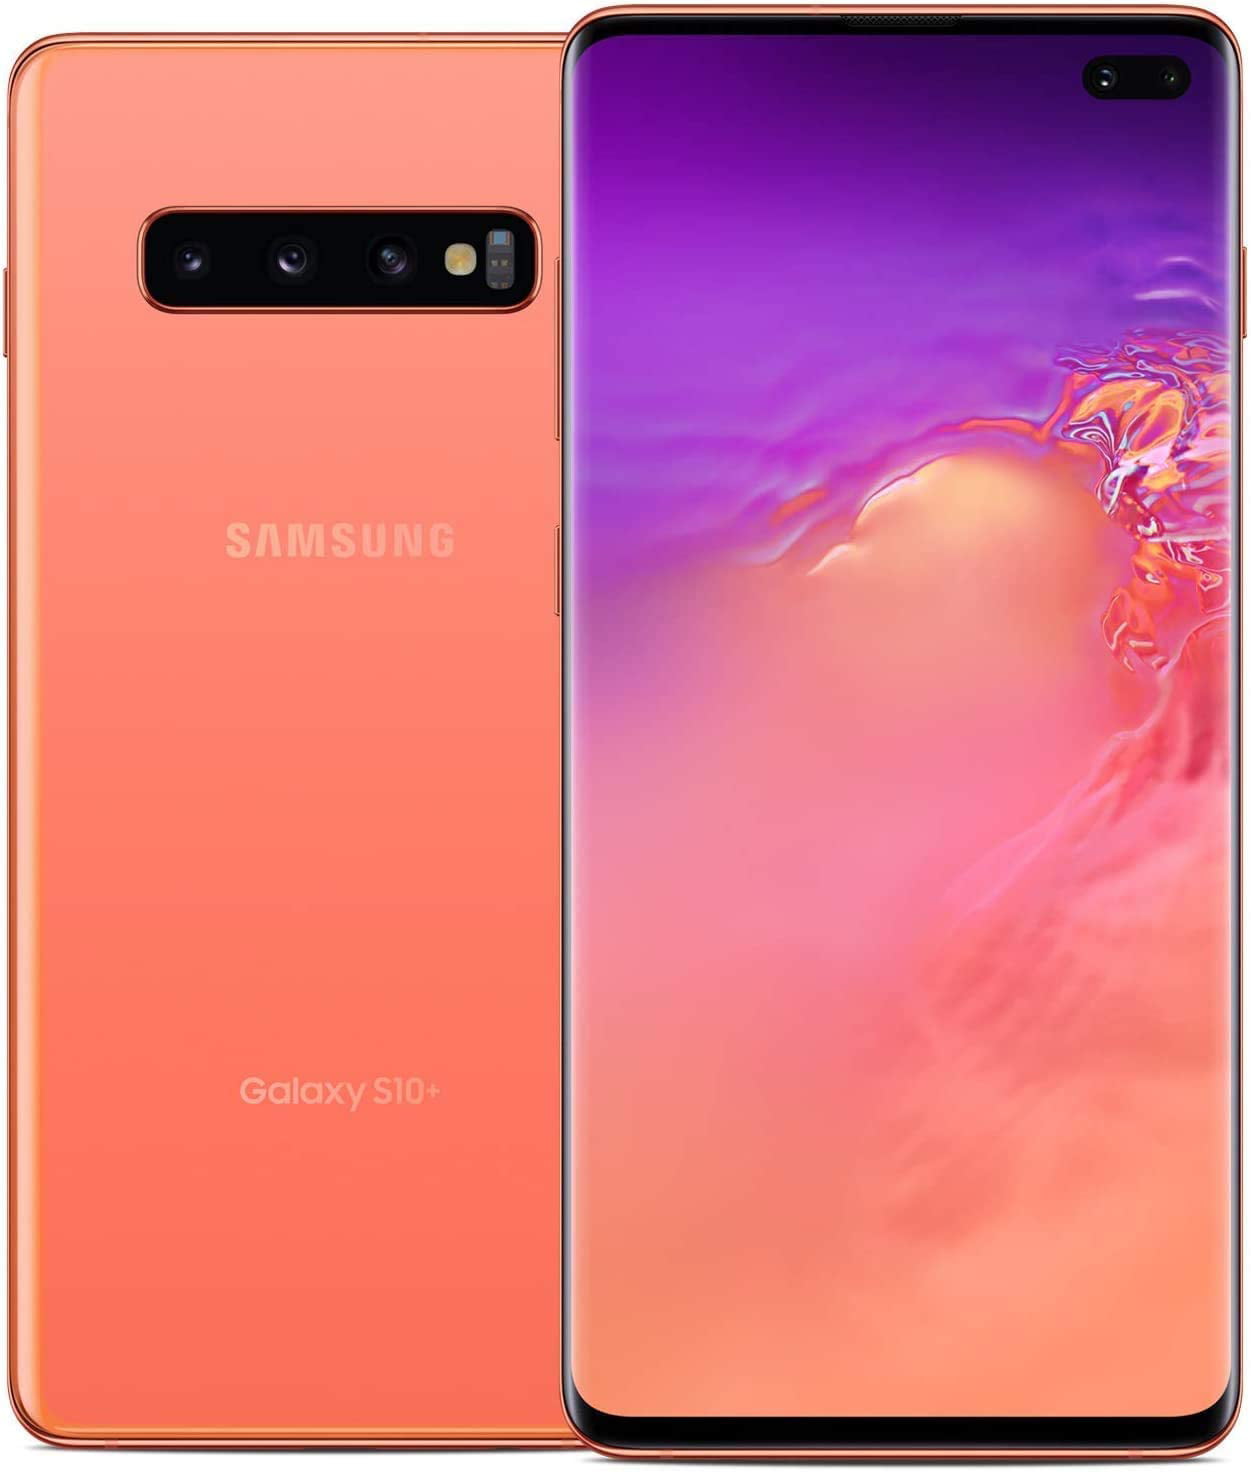 Like New Samsung Galaxy S10+ Plus SM-G975U1 128GB Pink (US Model